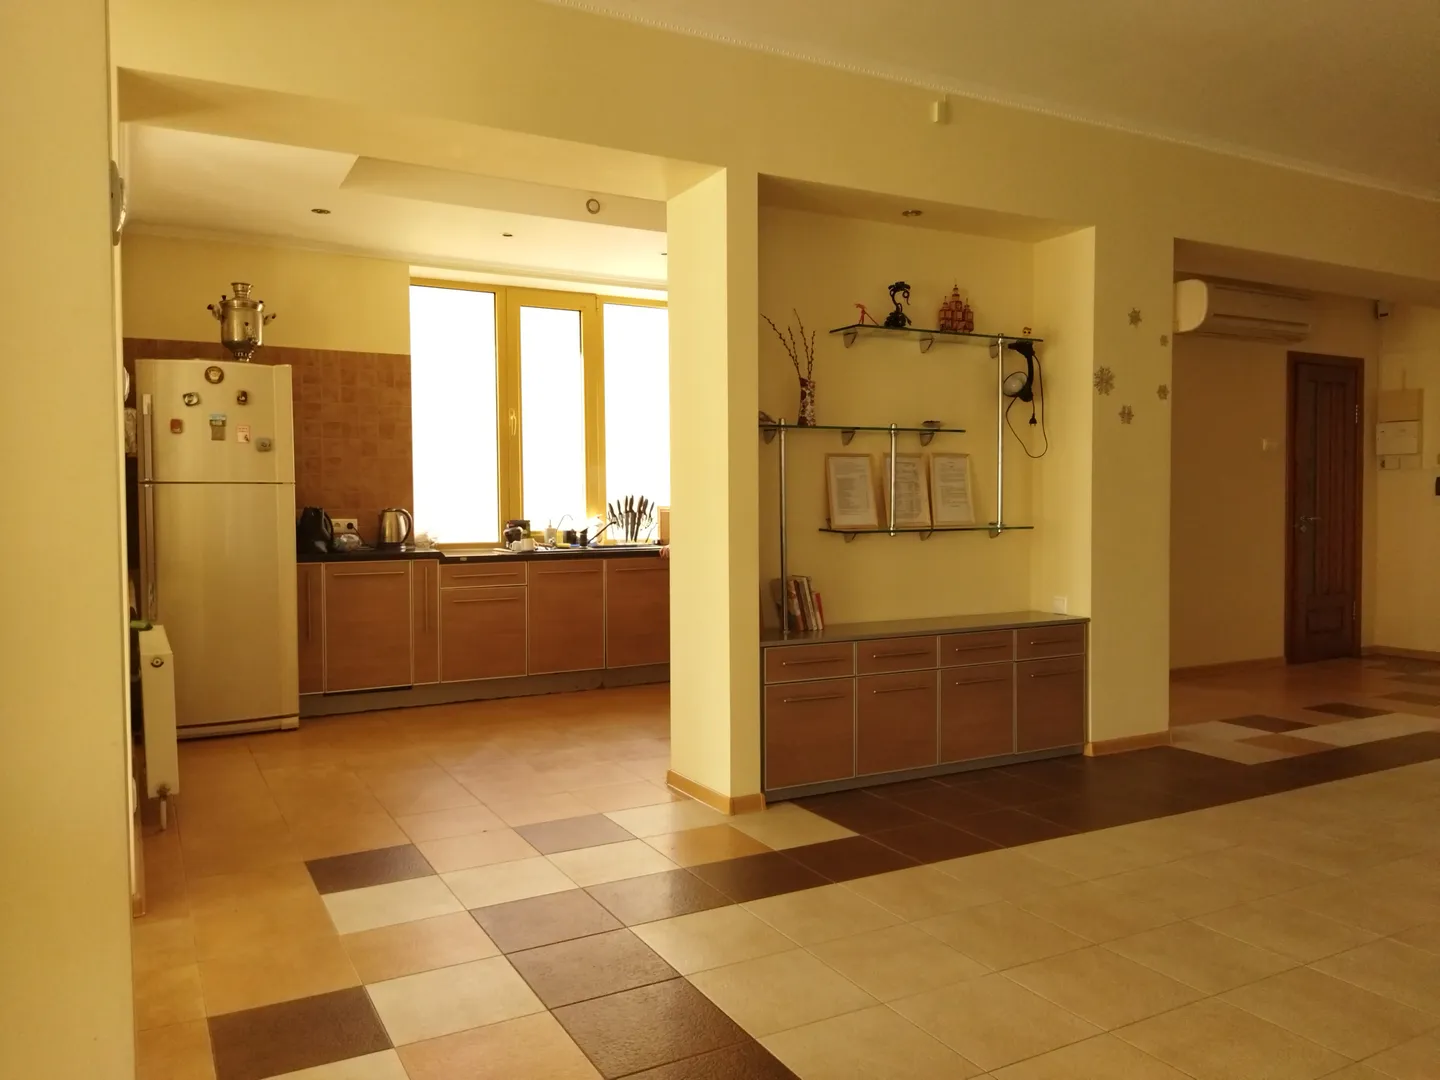 Вид на кухню из общей комнаты